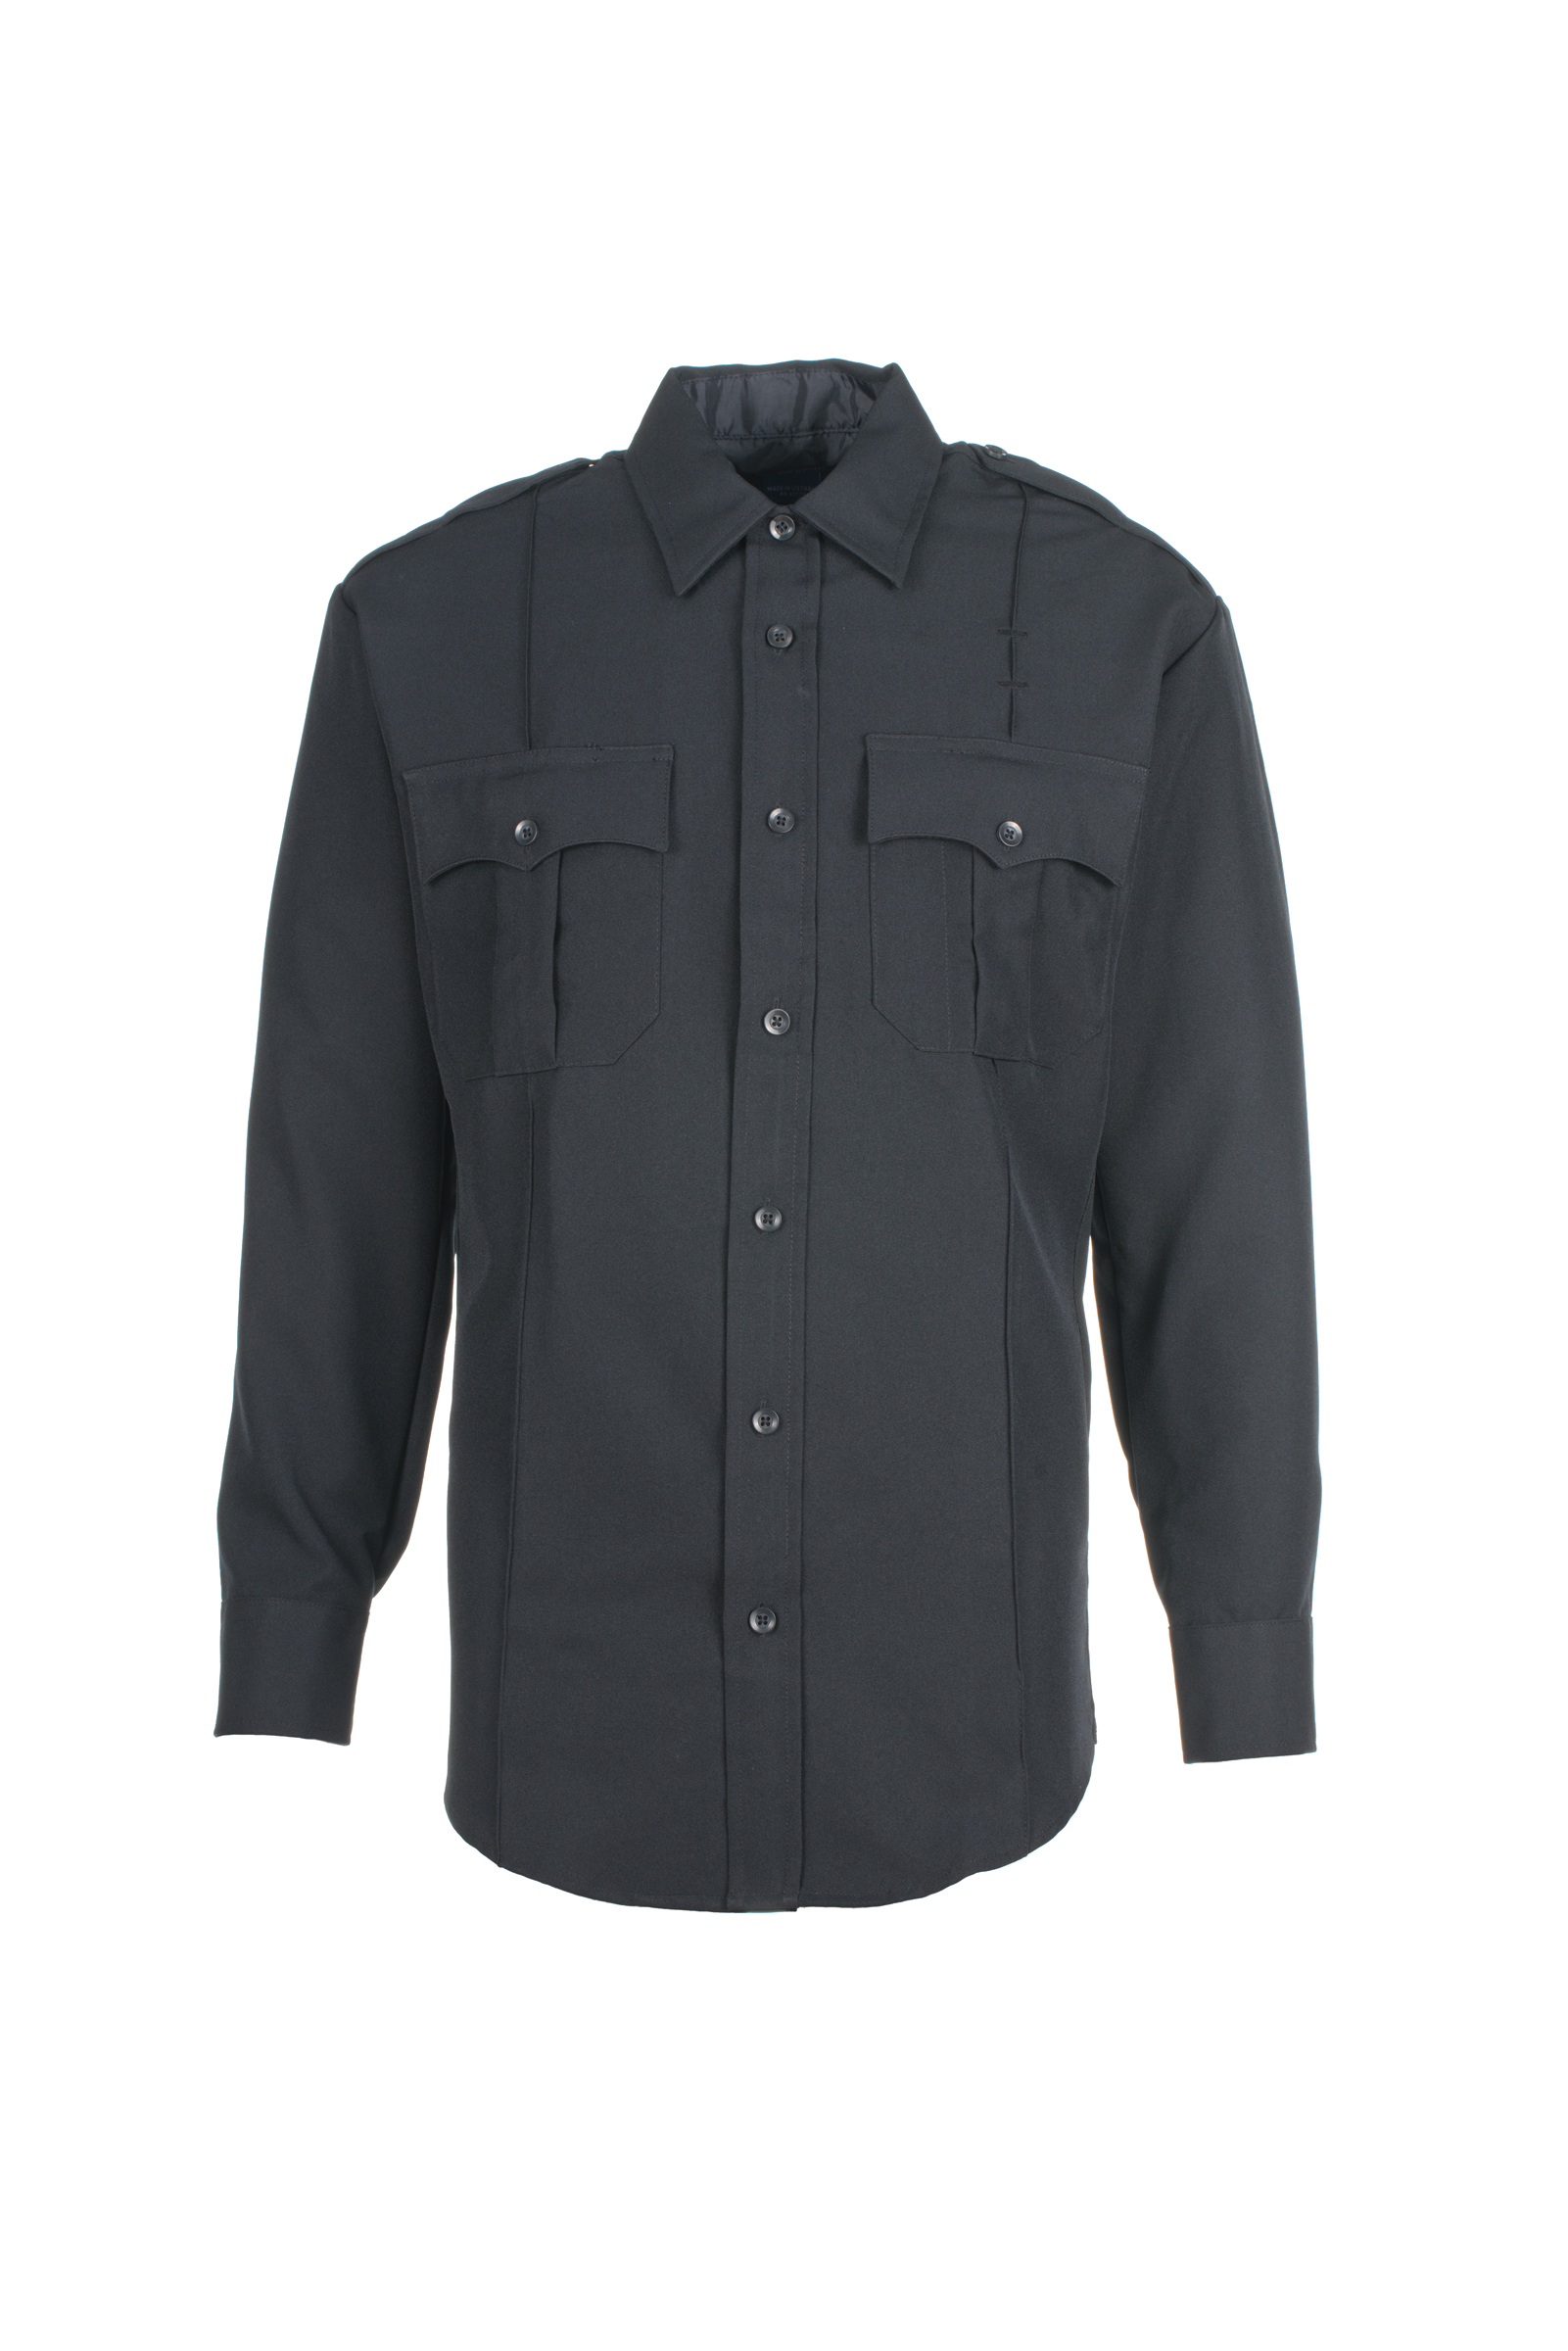 Microfiber Poly Long-Sleeve Duty Shirts (Hidden Zip) | Spiewak